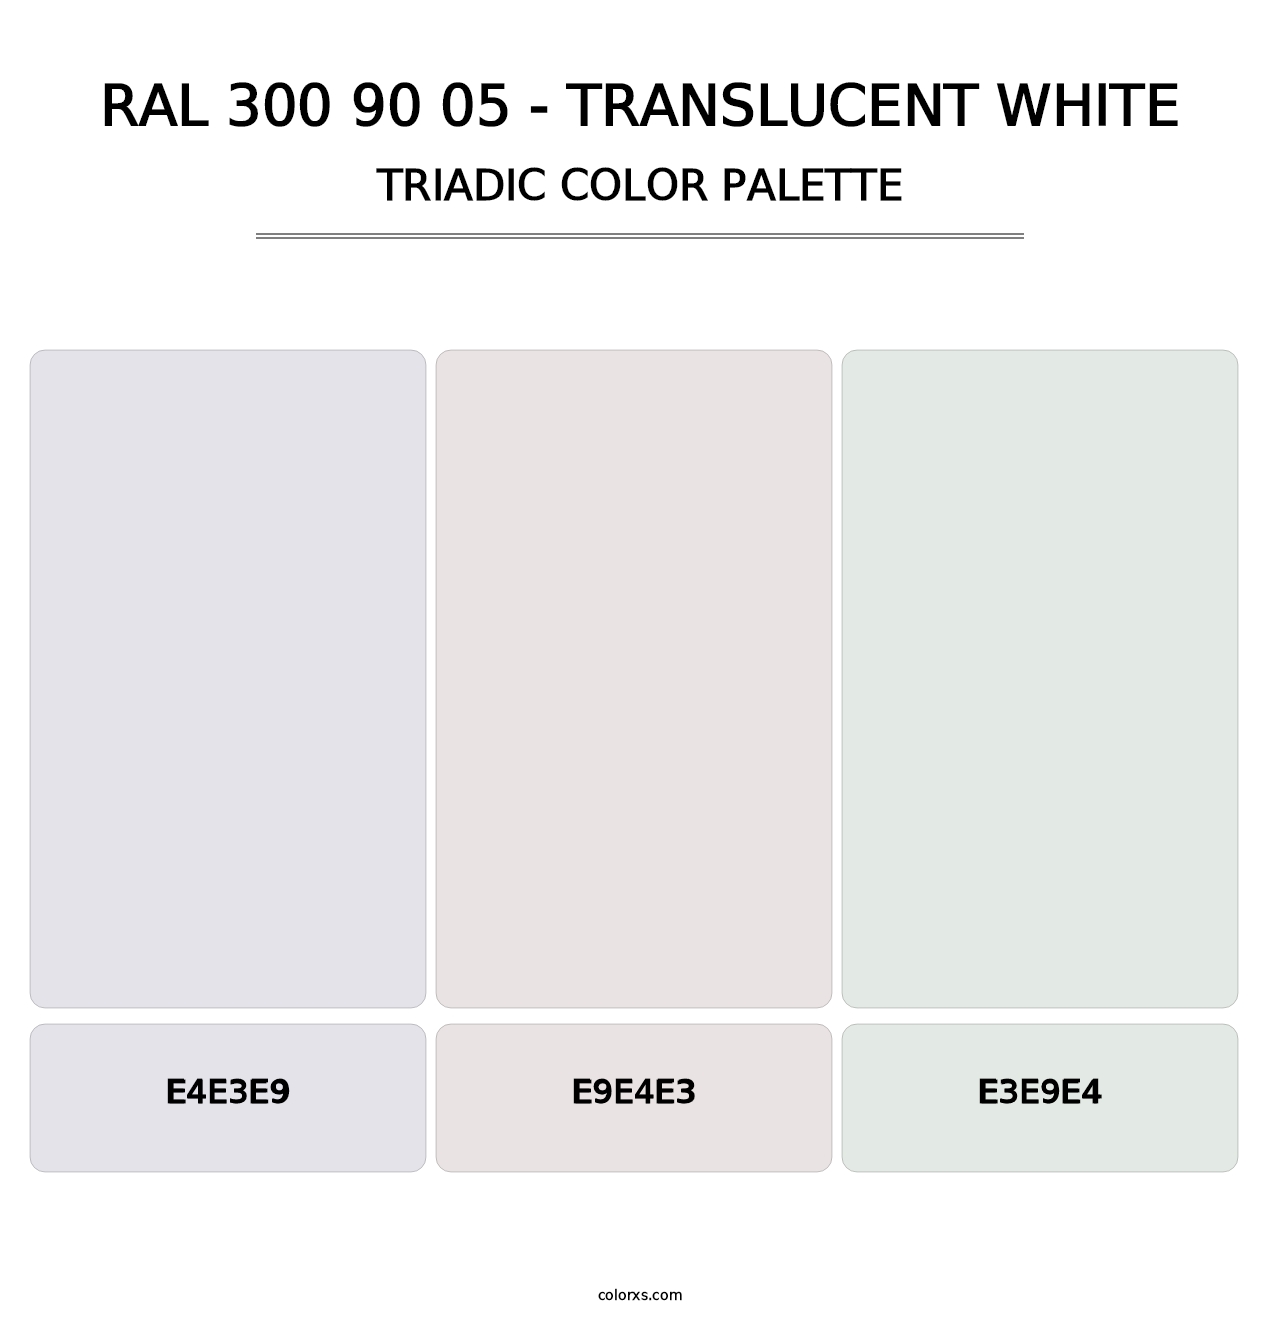 RAL 300 90 05 - Translucent White - Triadic Color Palette